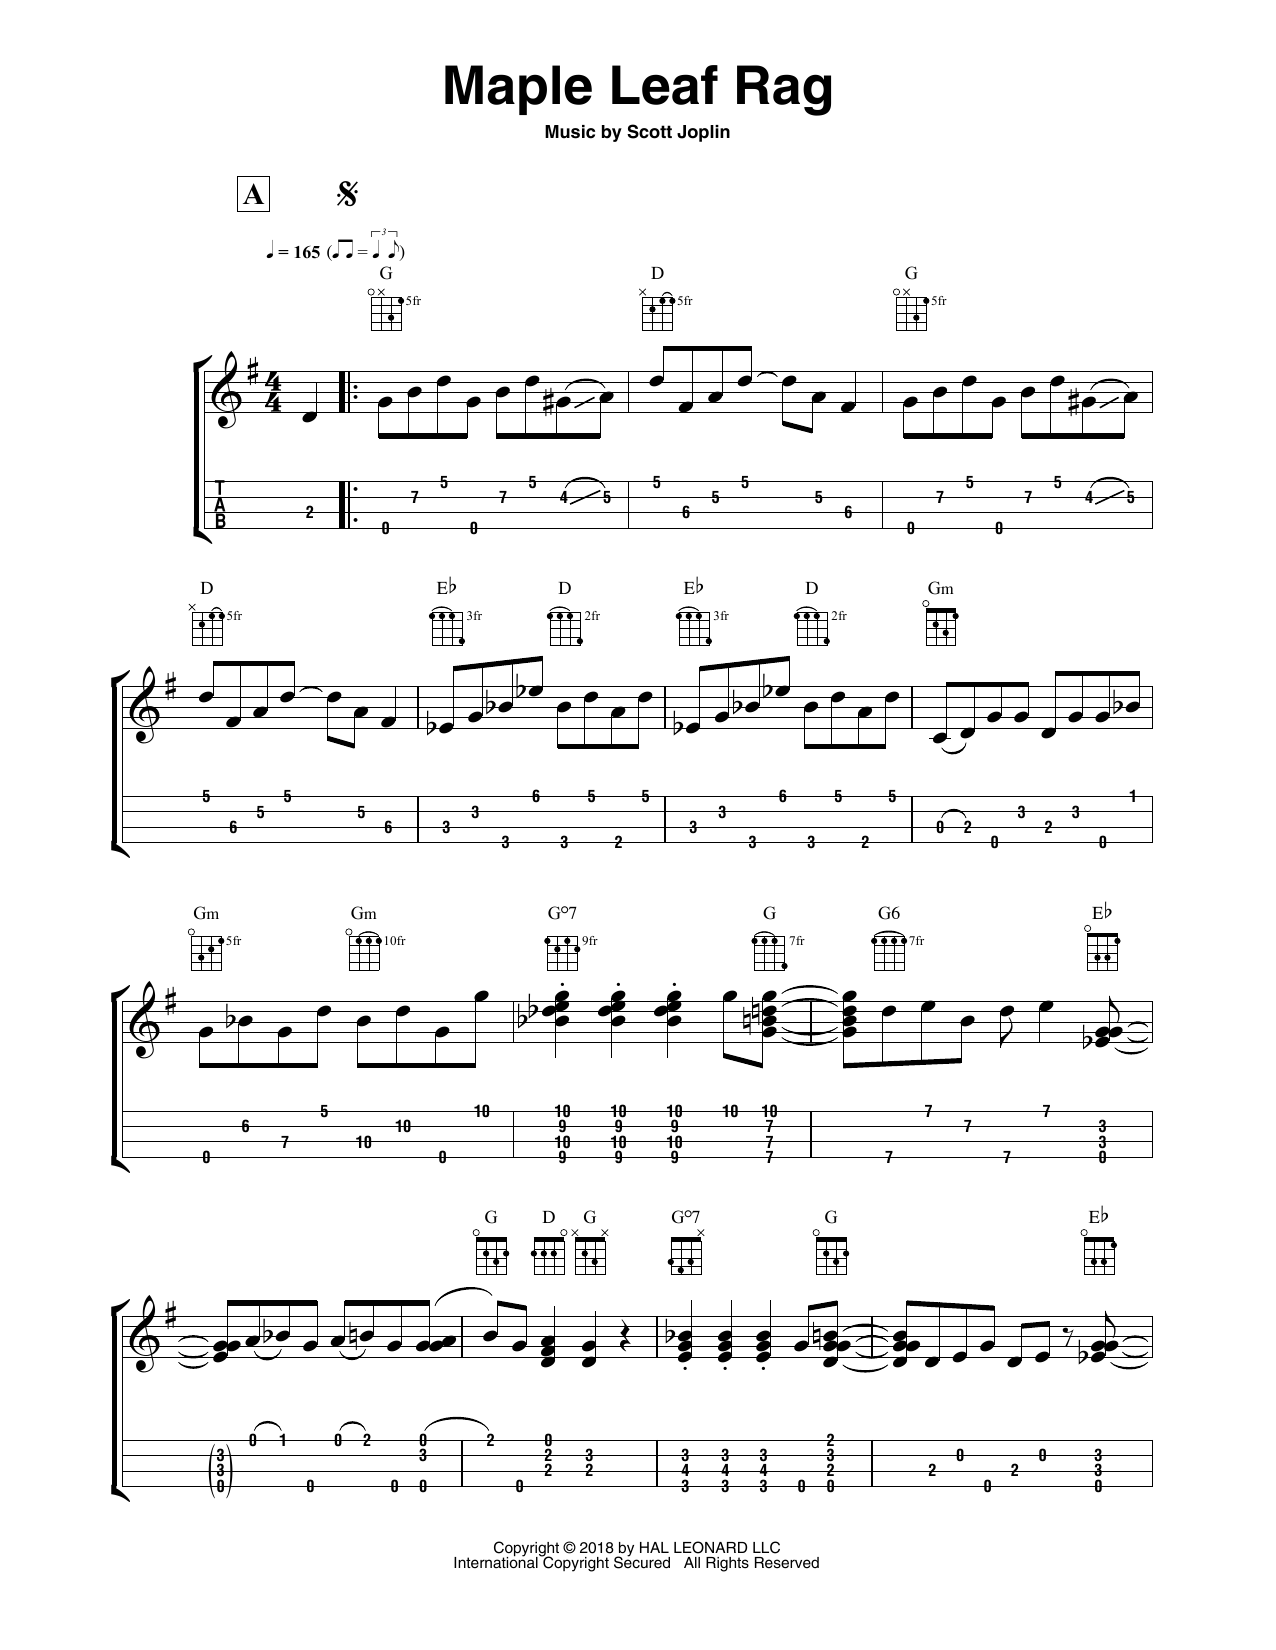 Fred Sokolow Maple Leaf Rag Sheet Music Notes & Chords for Ukulele - Download or Print PDF